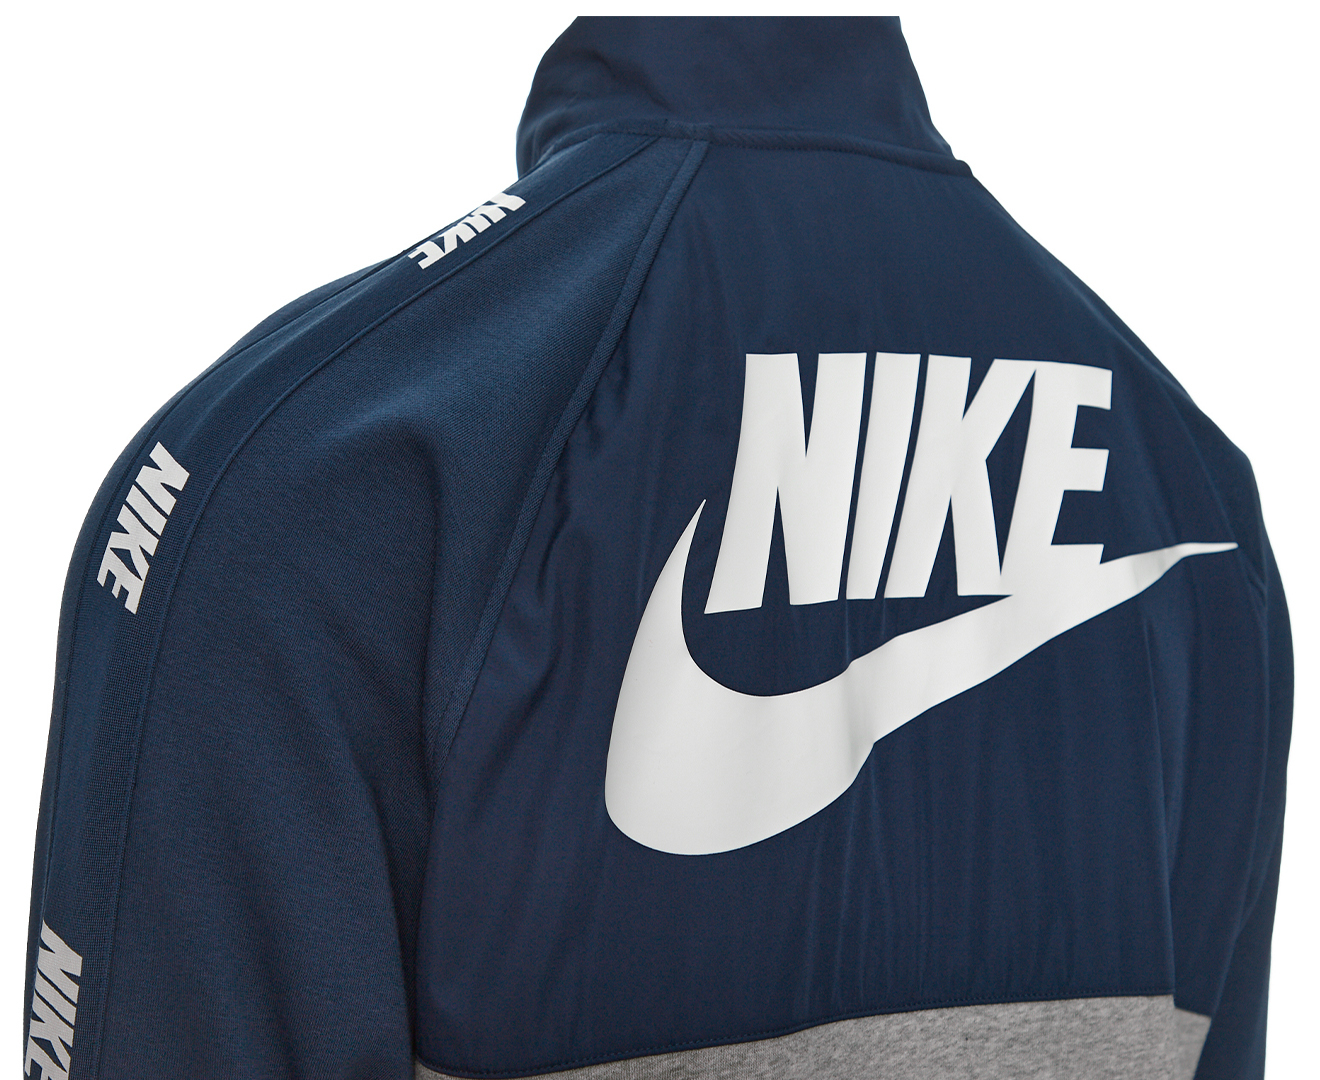 Nike Sportswear Men's Hybrid Tracksuit Top - Midnight Navy/Dark Grey ...